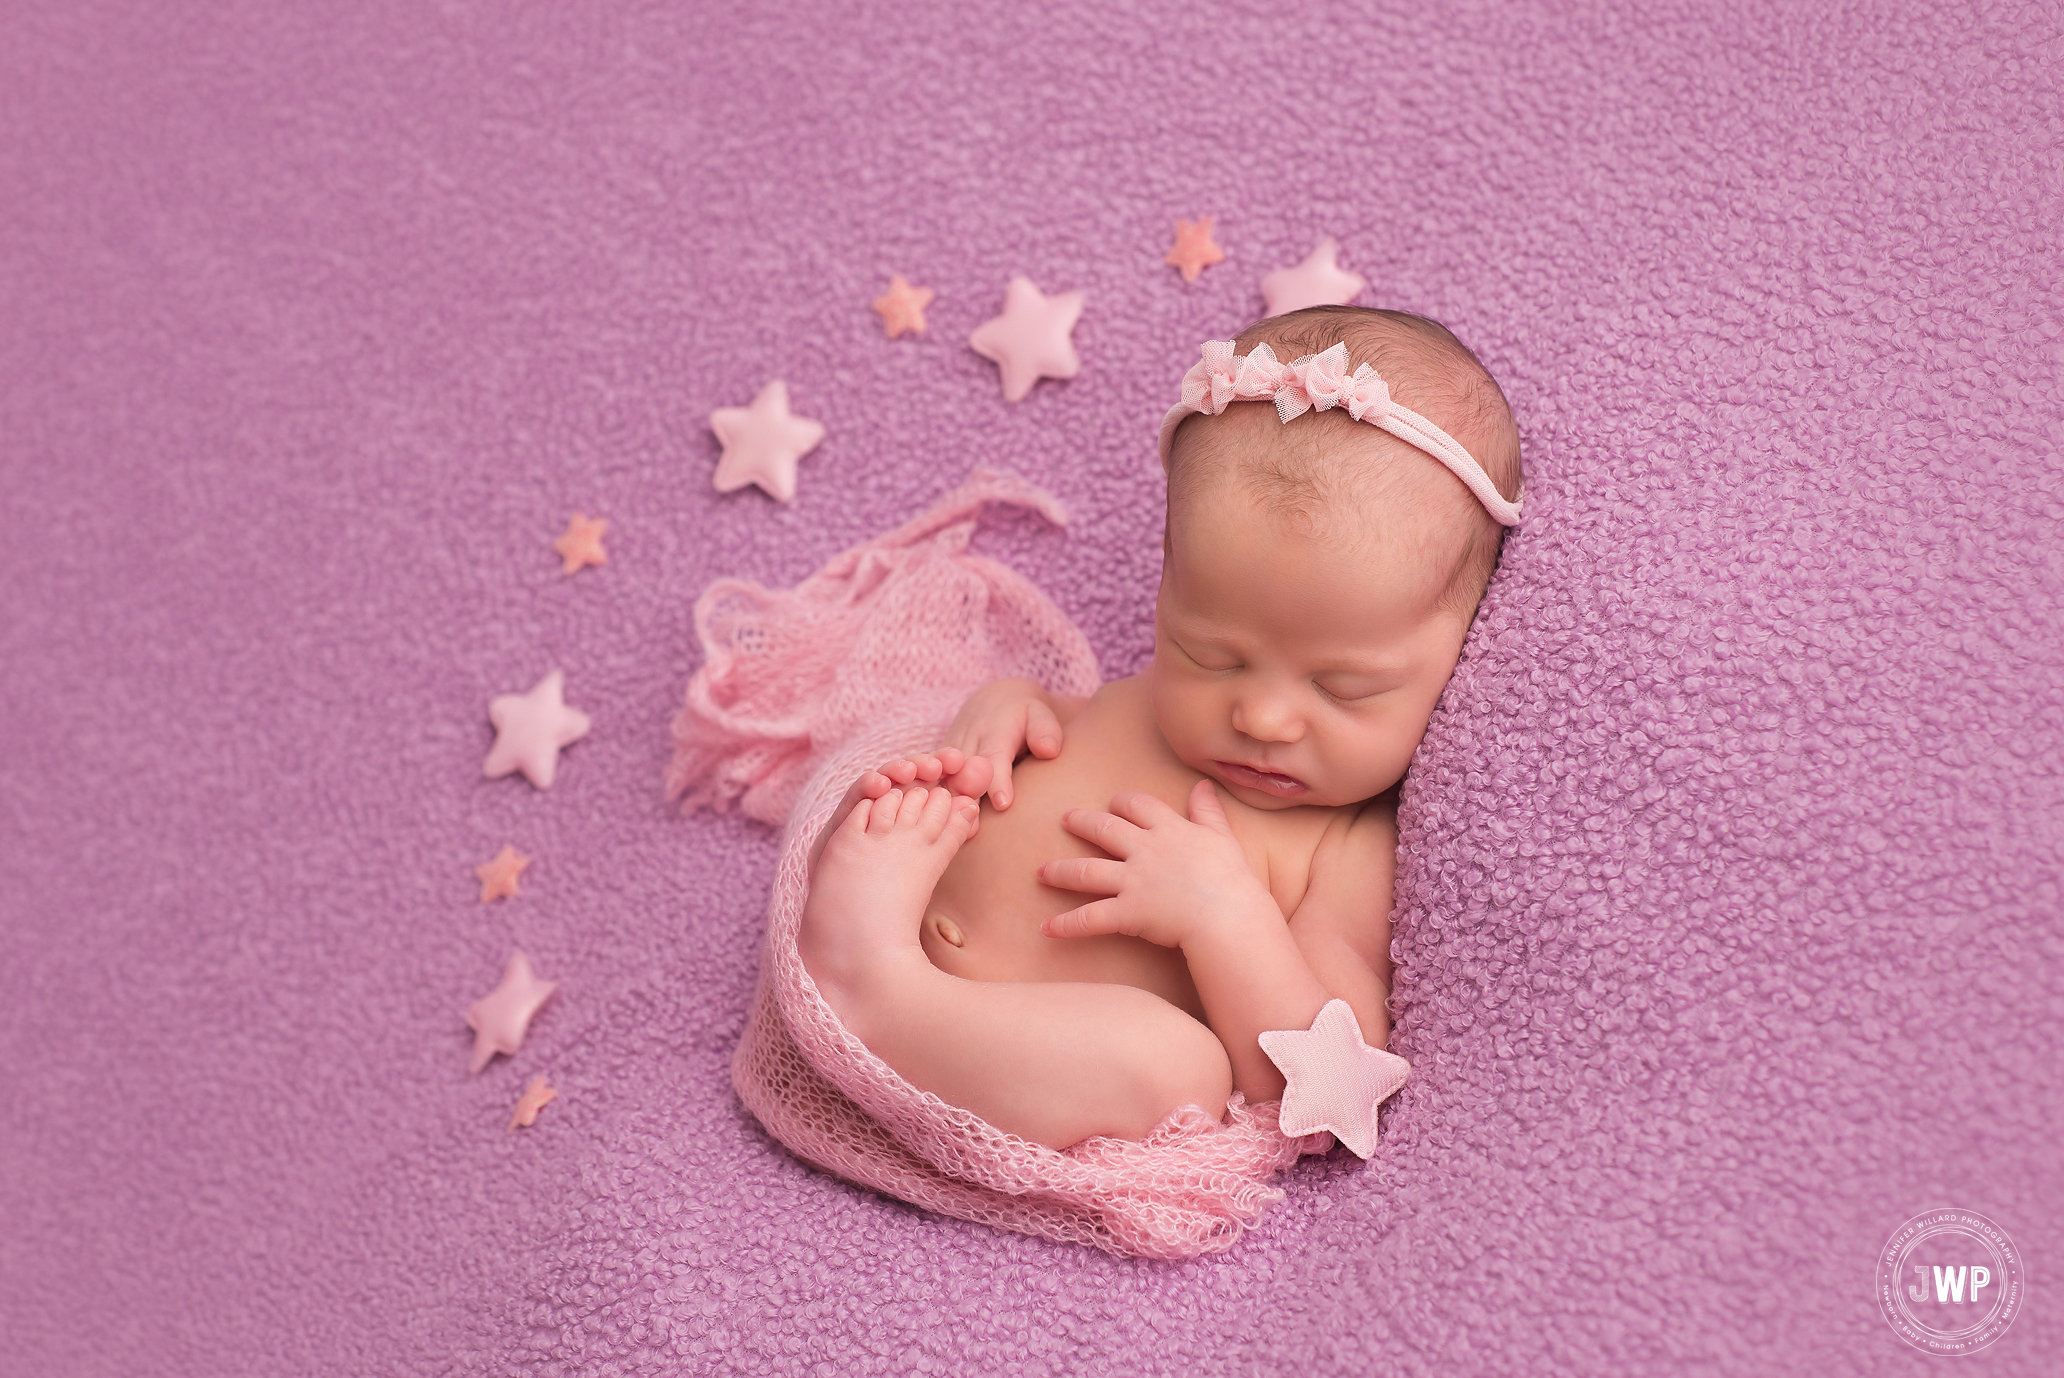 baby girl purple blanket stars Kingston newborn photographer